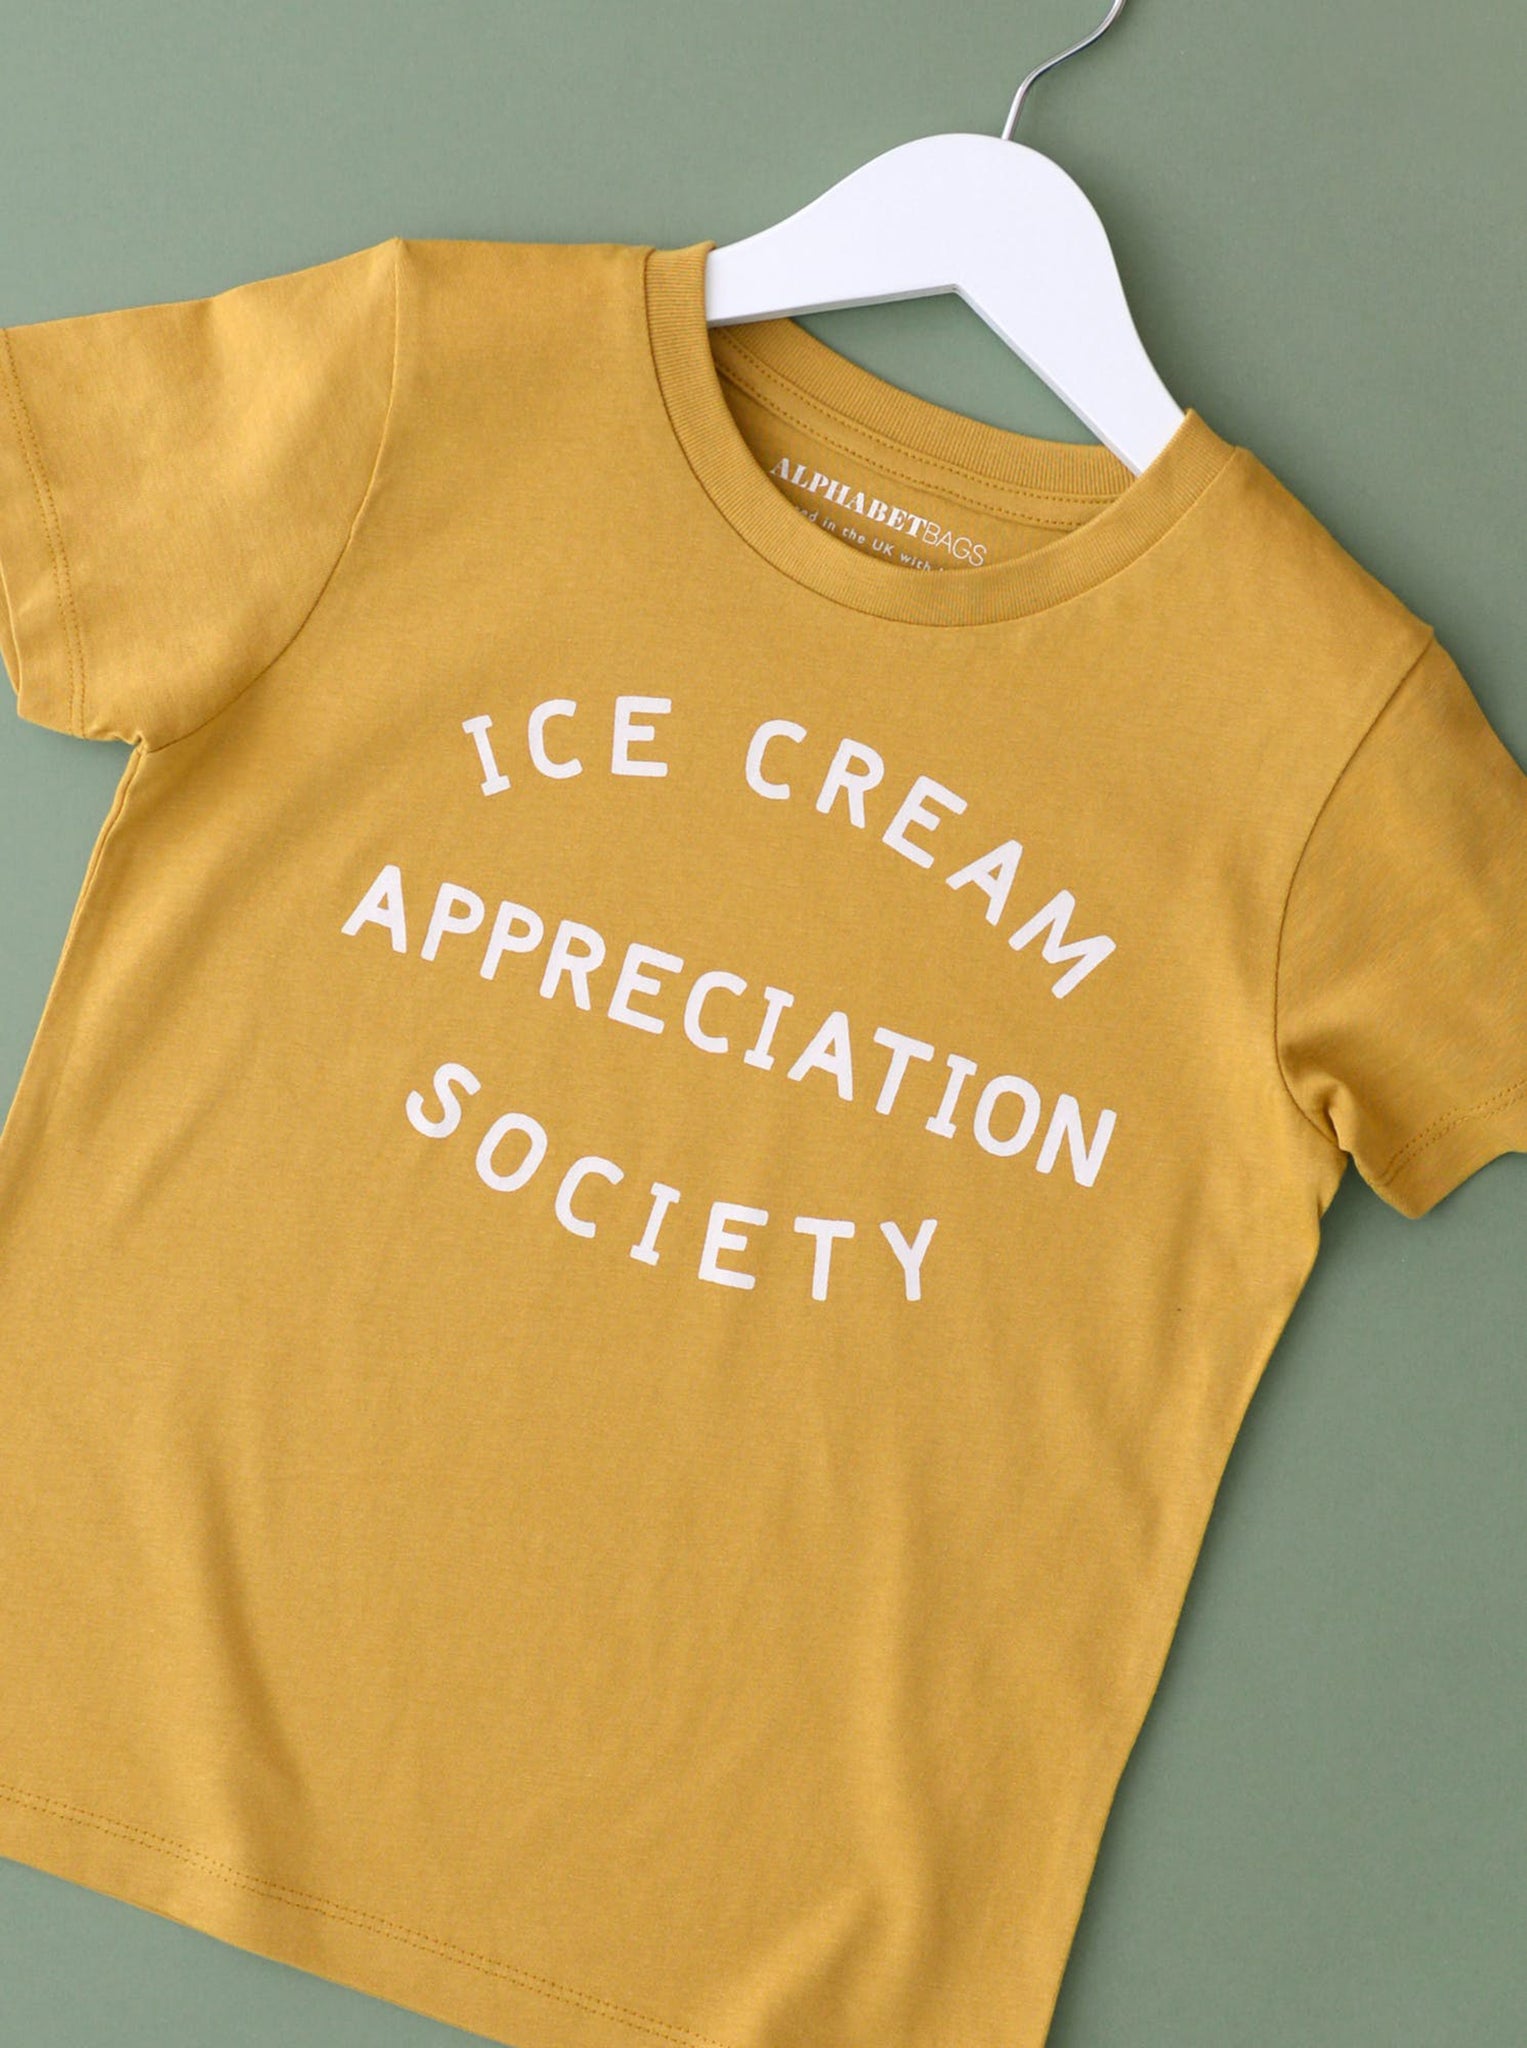 Ice Cream Appreciation Society honeycomb yellow kids t-shirt